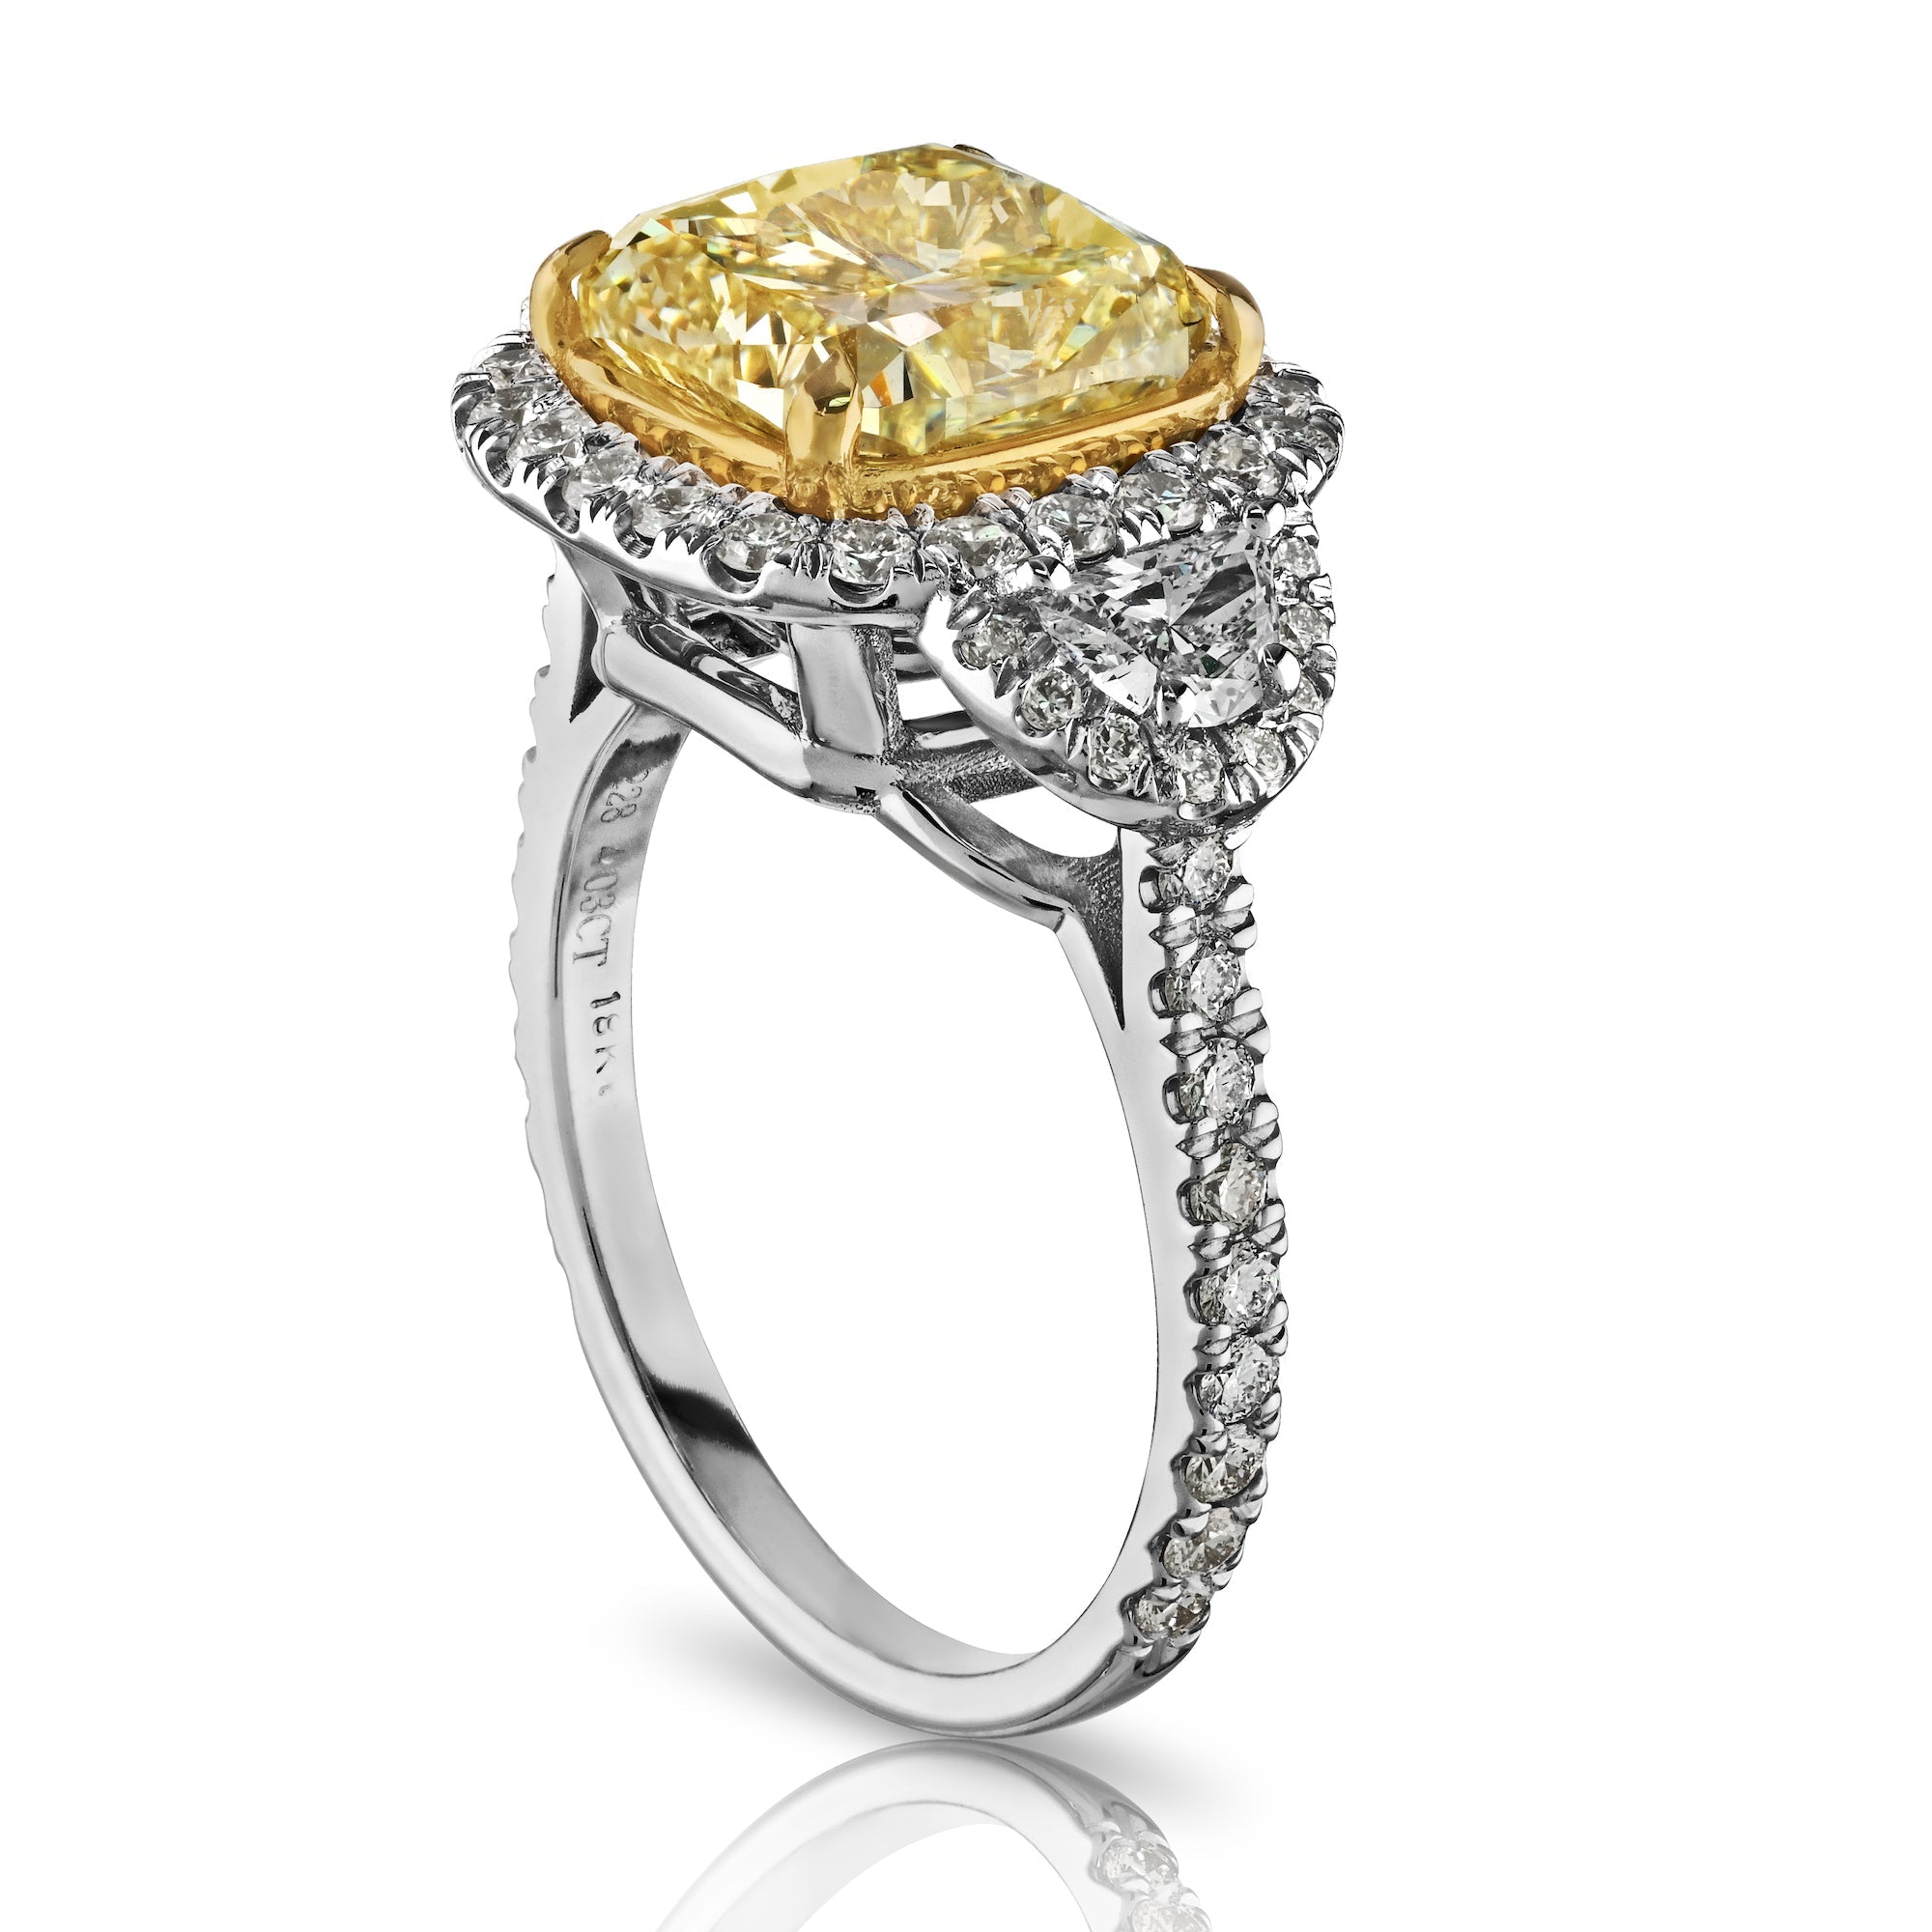 Fancy Light Yellow Diamond Ring with White Diamond Halo and Half-Moon Cuts, 4.03 CT - Rings - Leviev Diamonds